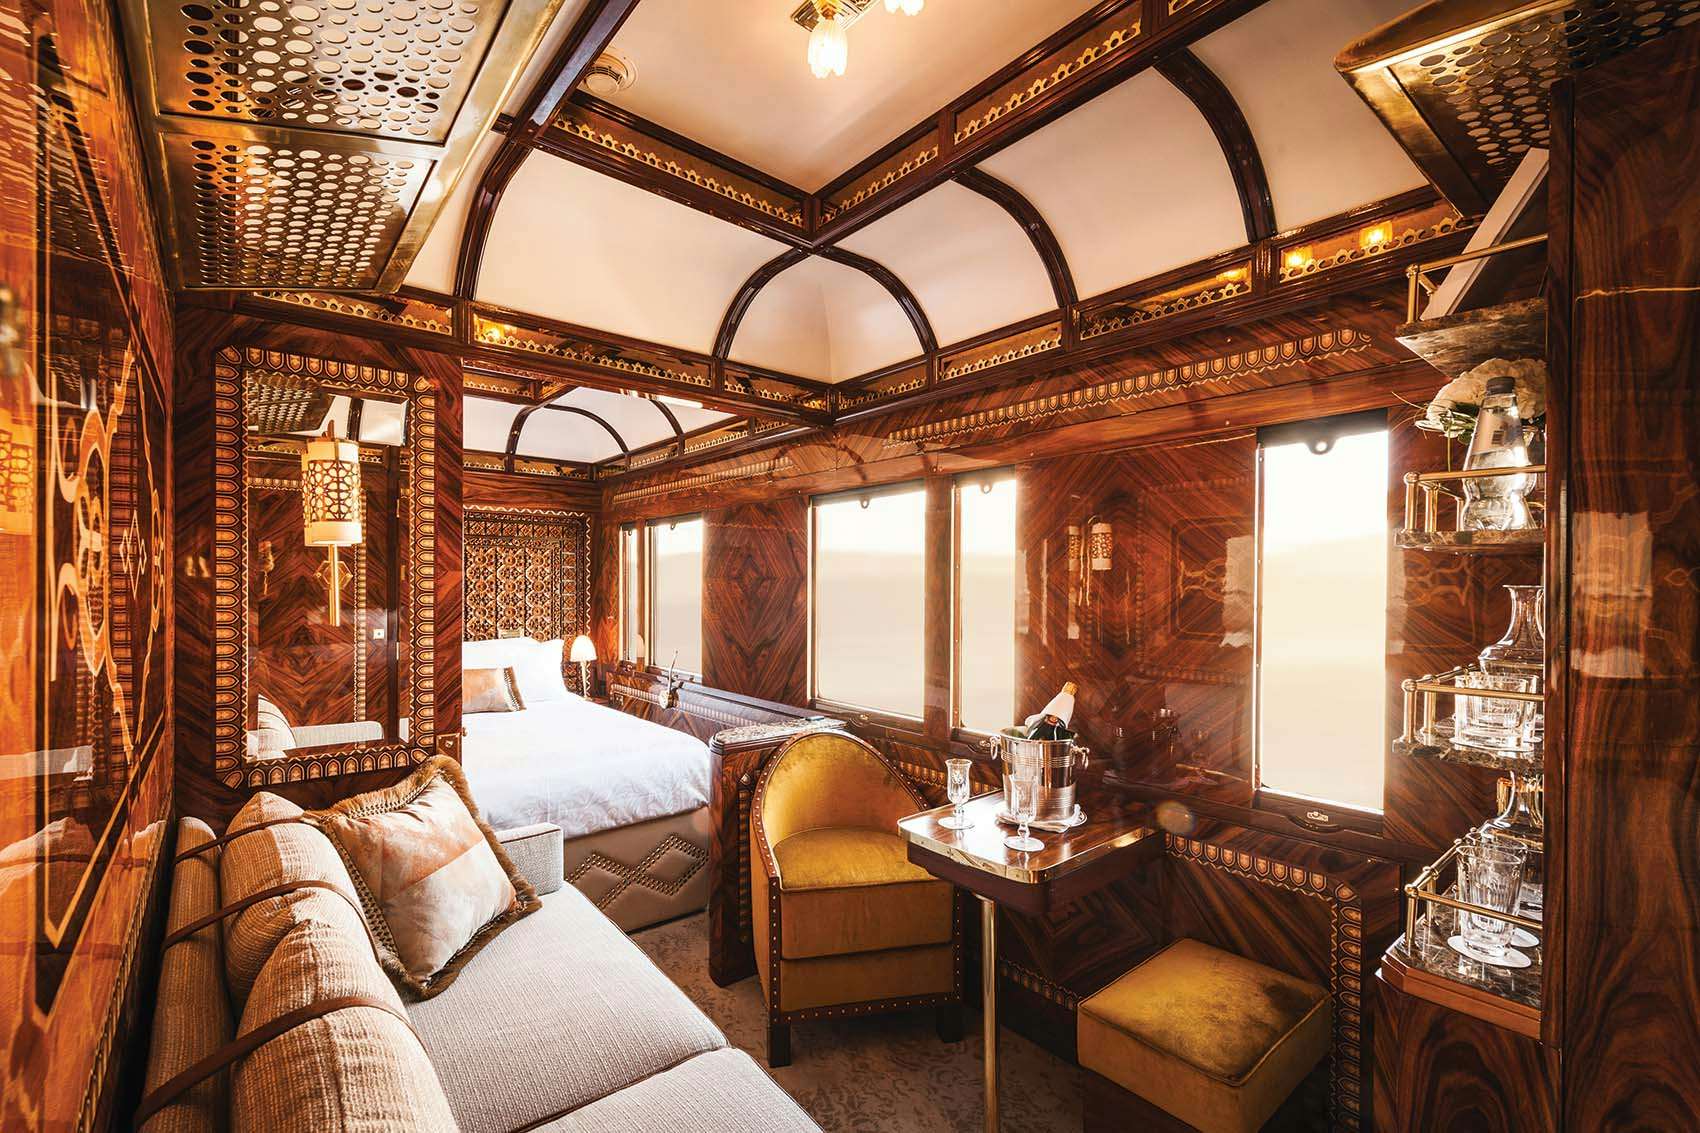 Eastern & Oriental Express 2023  Guide to the Singapore-Bangkok luxury  train